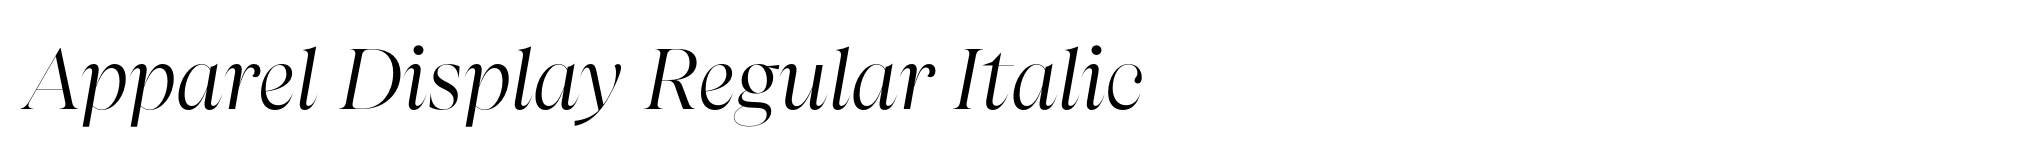 Apparel Display Regular Italic image